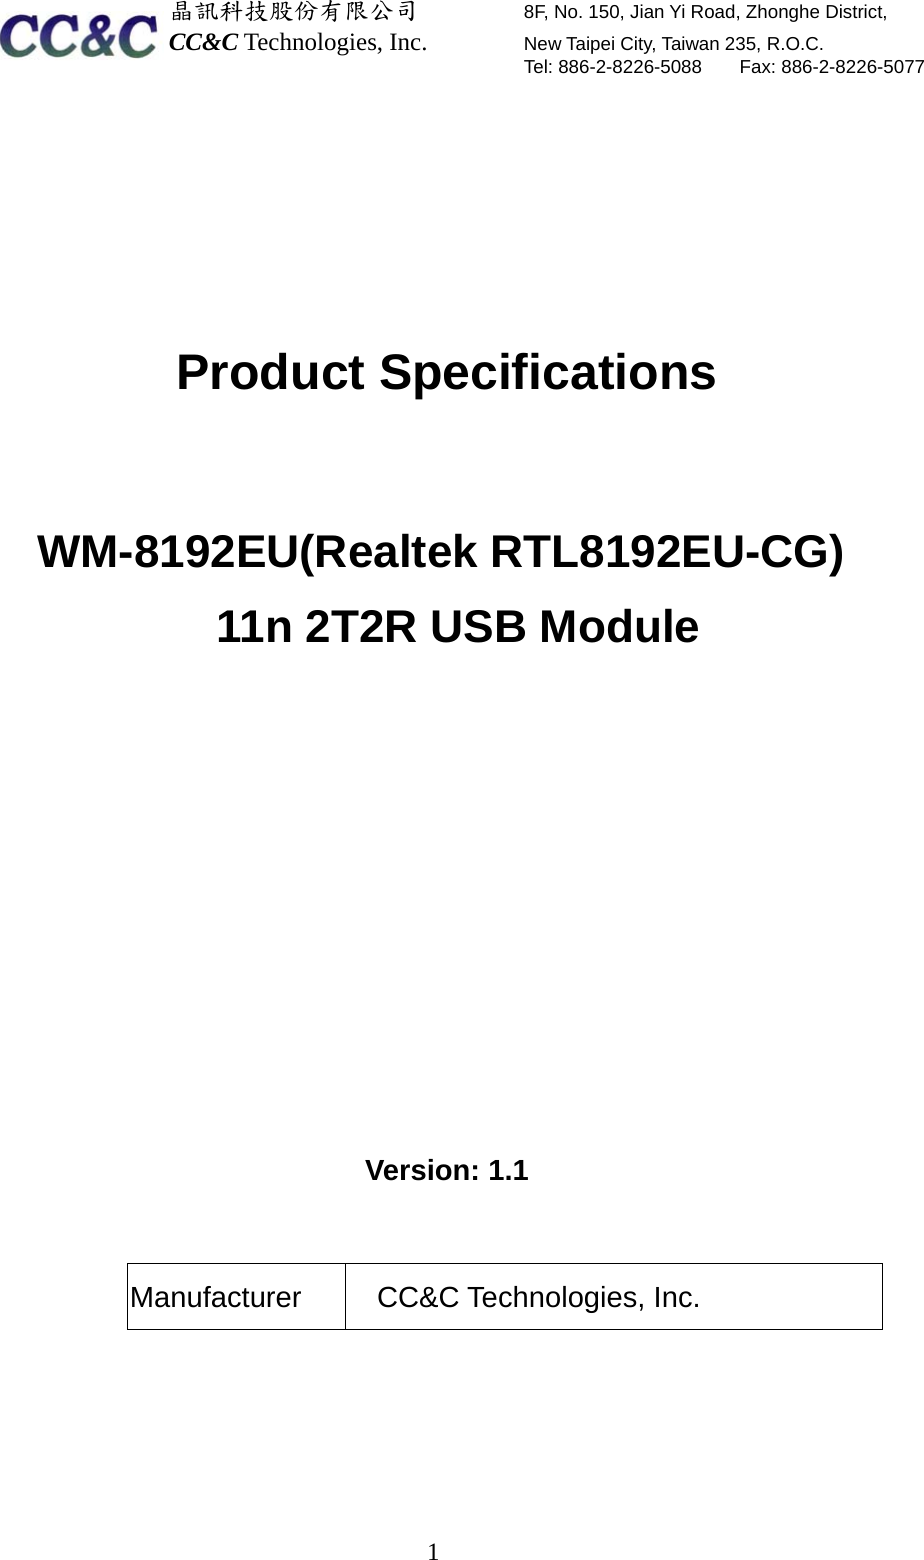  晶訊科技股份有限公司         8F, No. 150, Jian Yi Road, Zhonghe District,   CC&amp;C Technologies, Inc.        New Taipei City, Taiwan 235, R.O.C.   Tel: 886-2-8226-5088    Fax: 886-2-8226-5077  1        Product Specifications    WM-8192EU(Realtek RTL8192EU-CG)   11n 2T2R USB Module              Version: 1.1   Manufacturer CC&amp;C Technologies, Inc.  